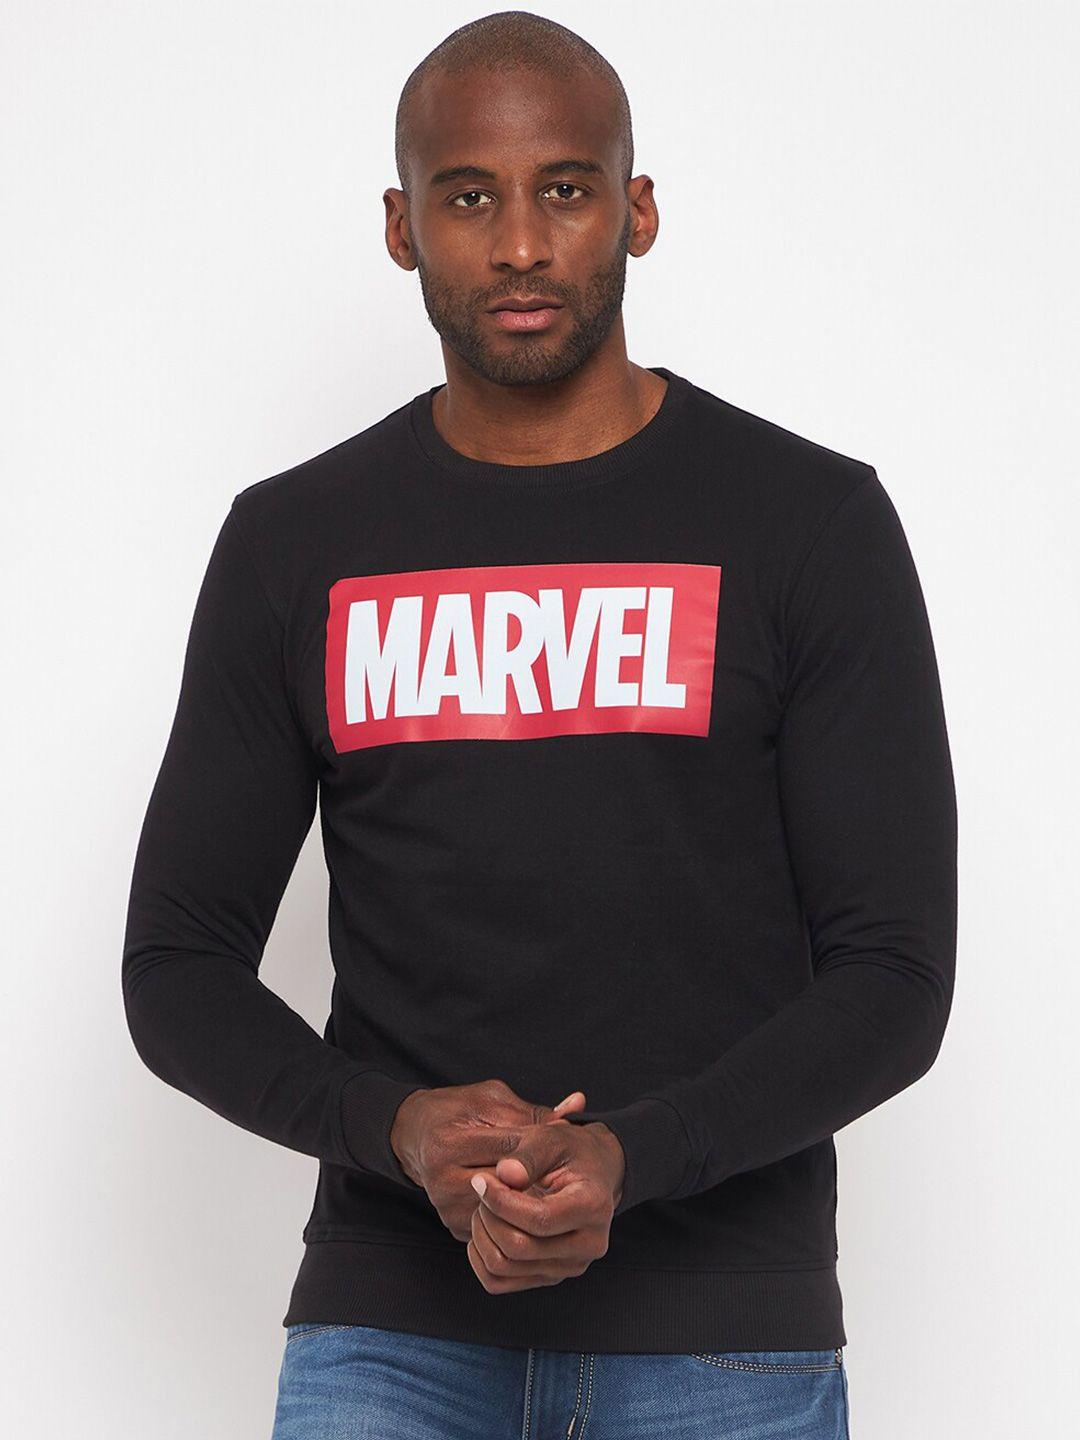 marvel-by-wear-your-mind-men-typography-printed-sweatshirt